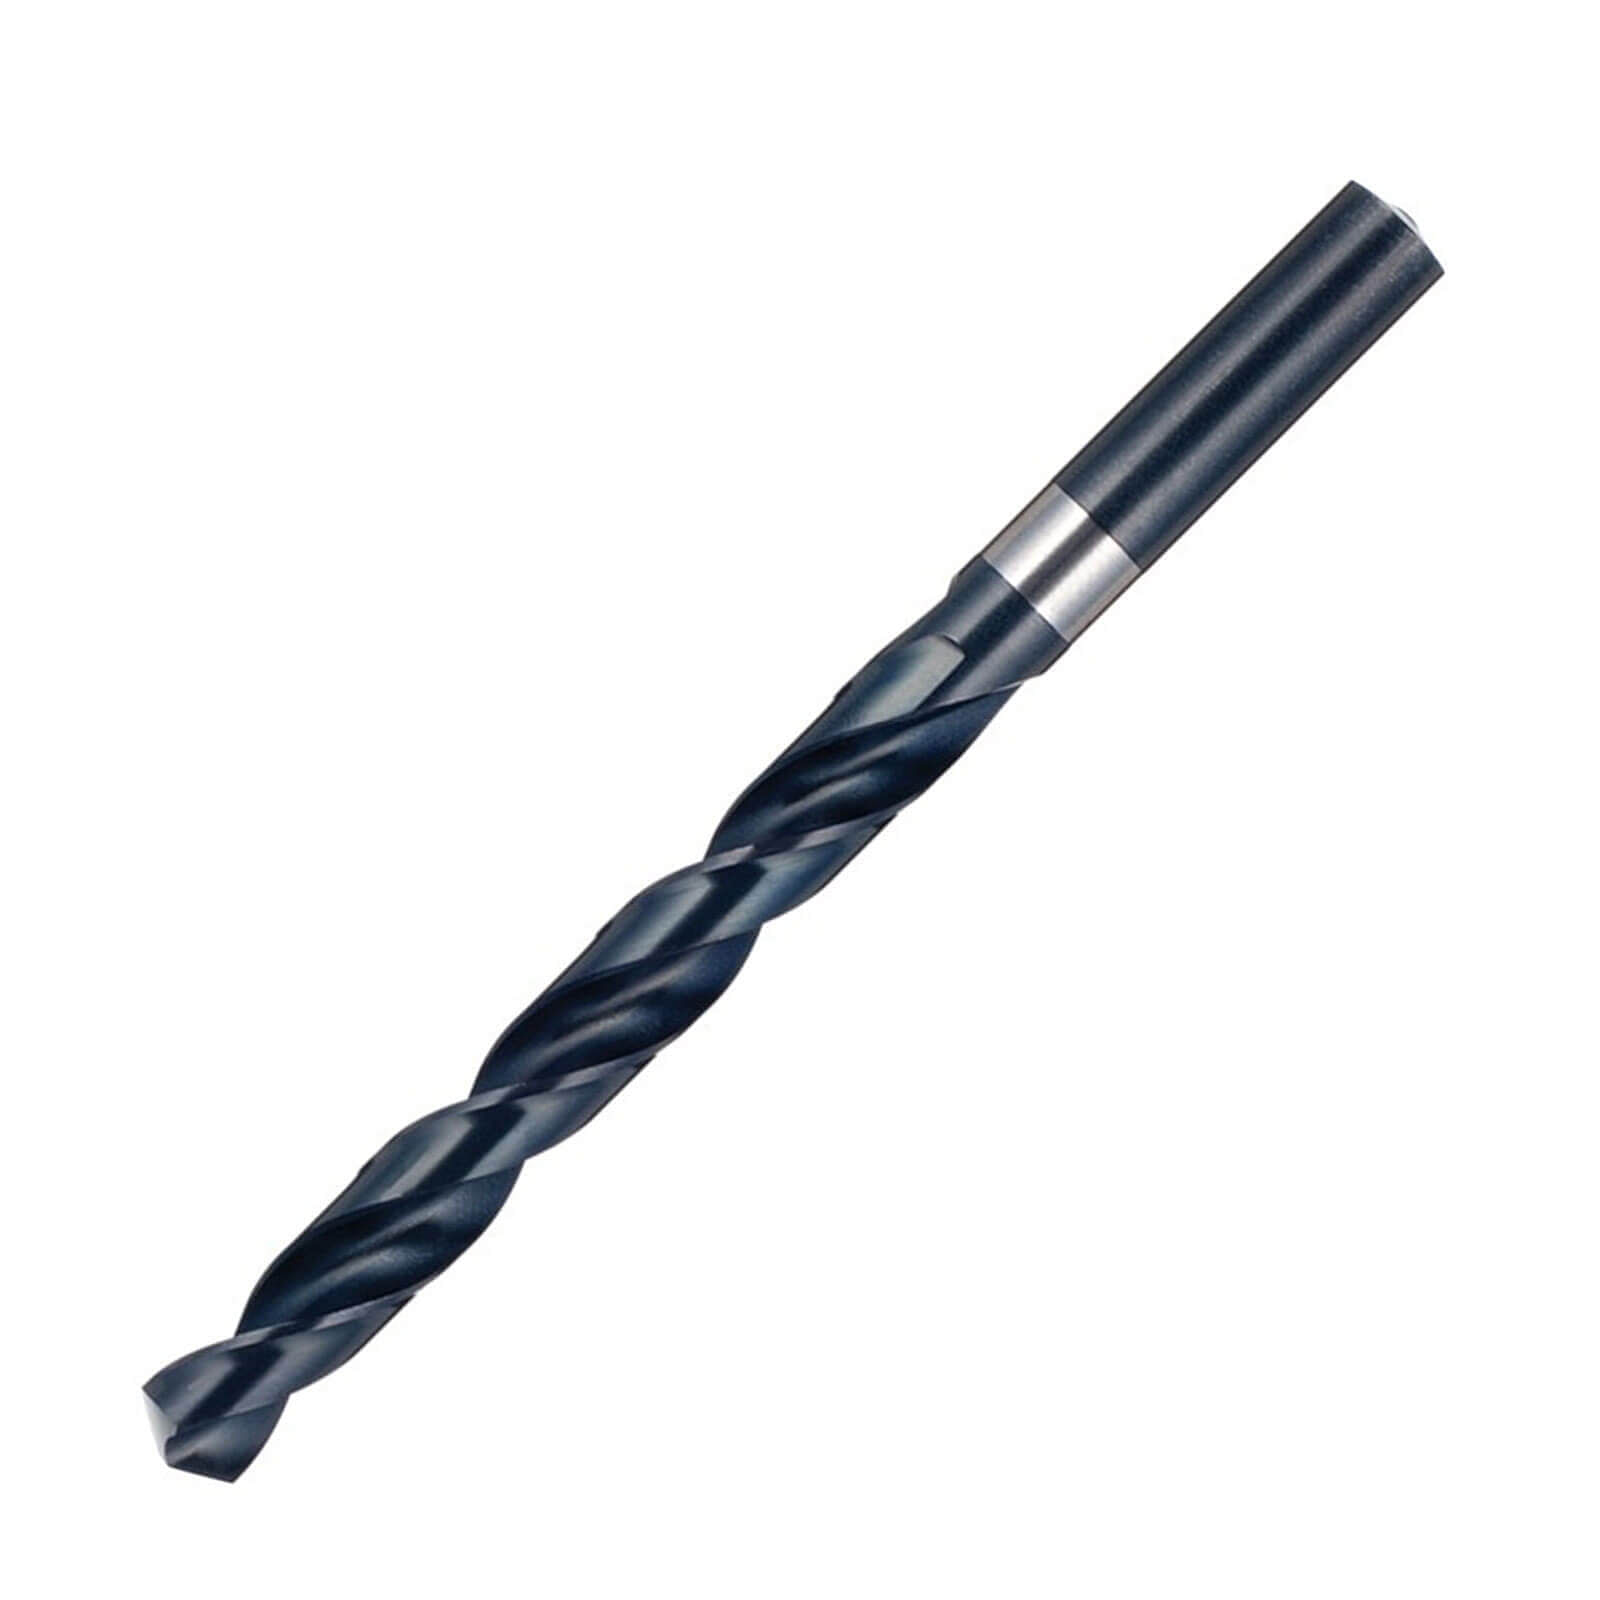 DORMER A002 HSS Tin Tipped 13mm Jobber Length Drill for sale online 